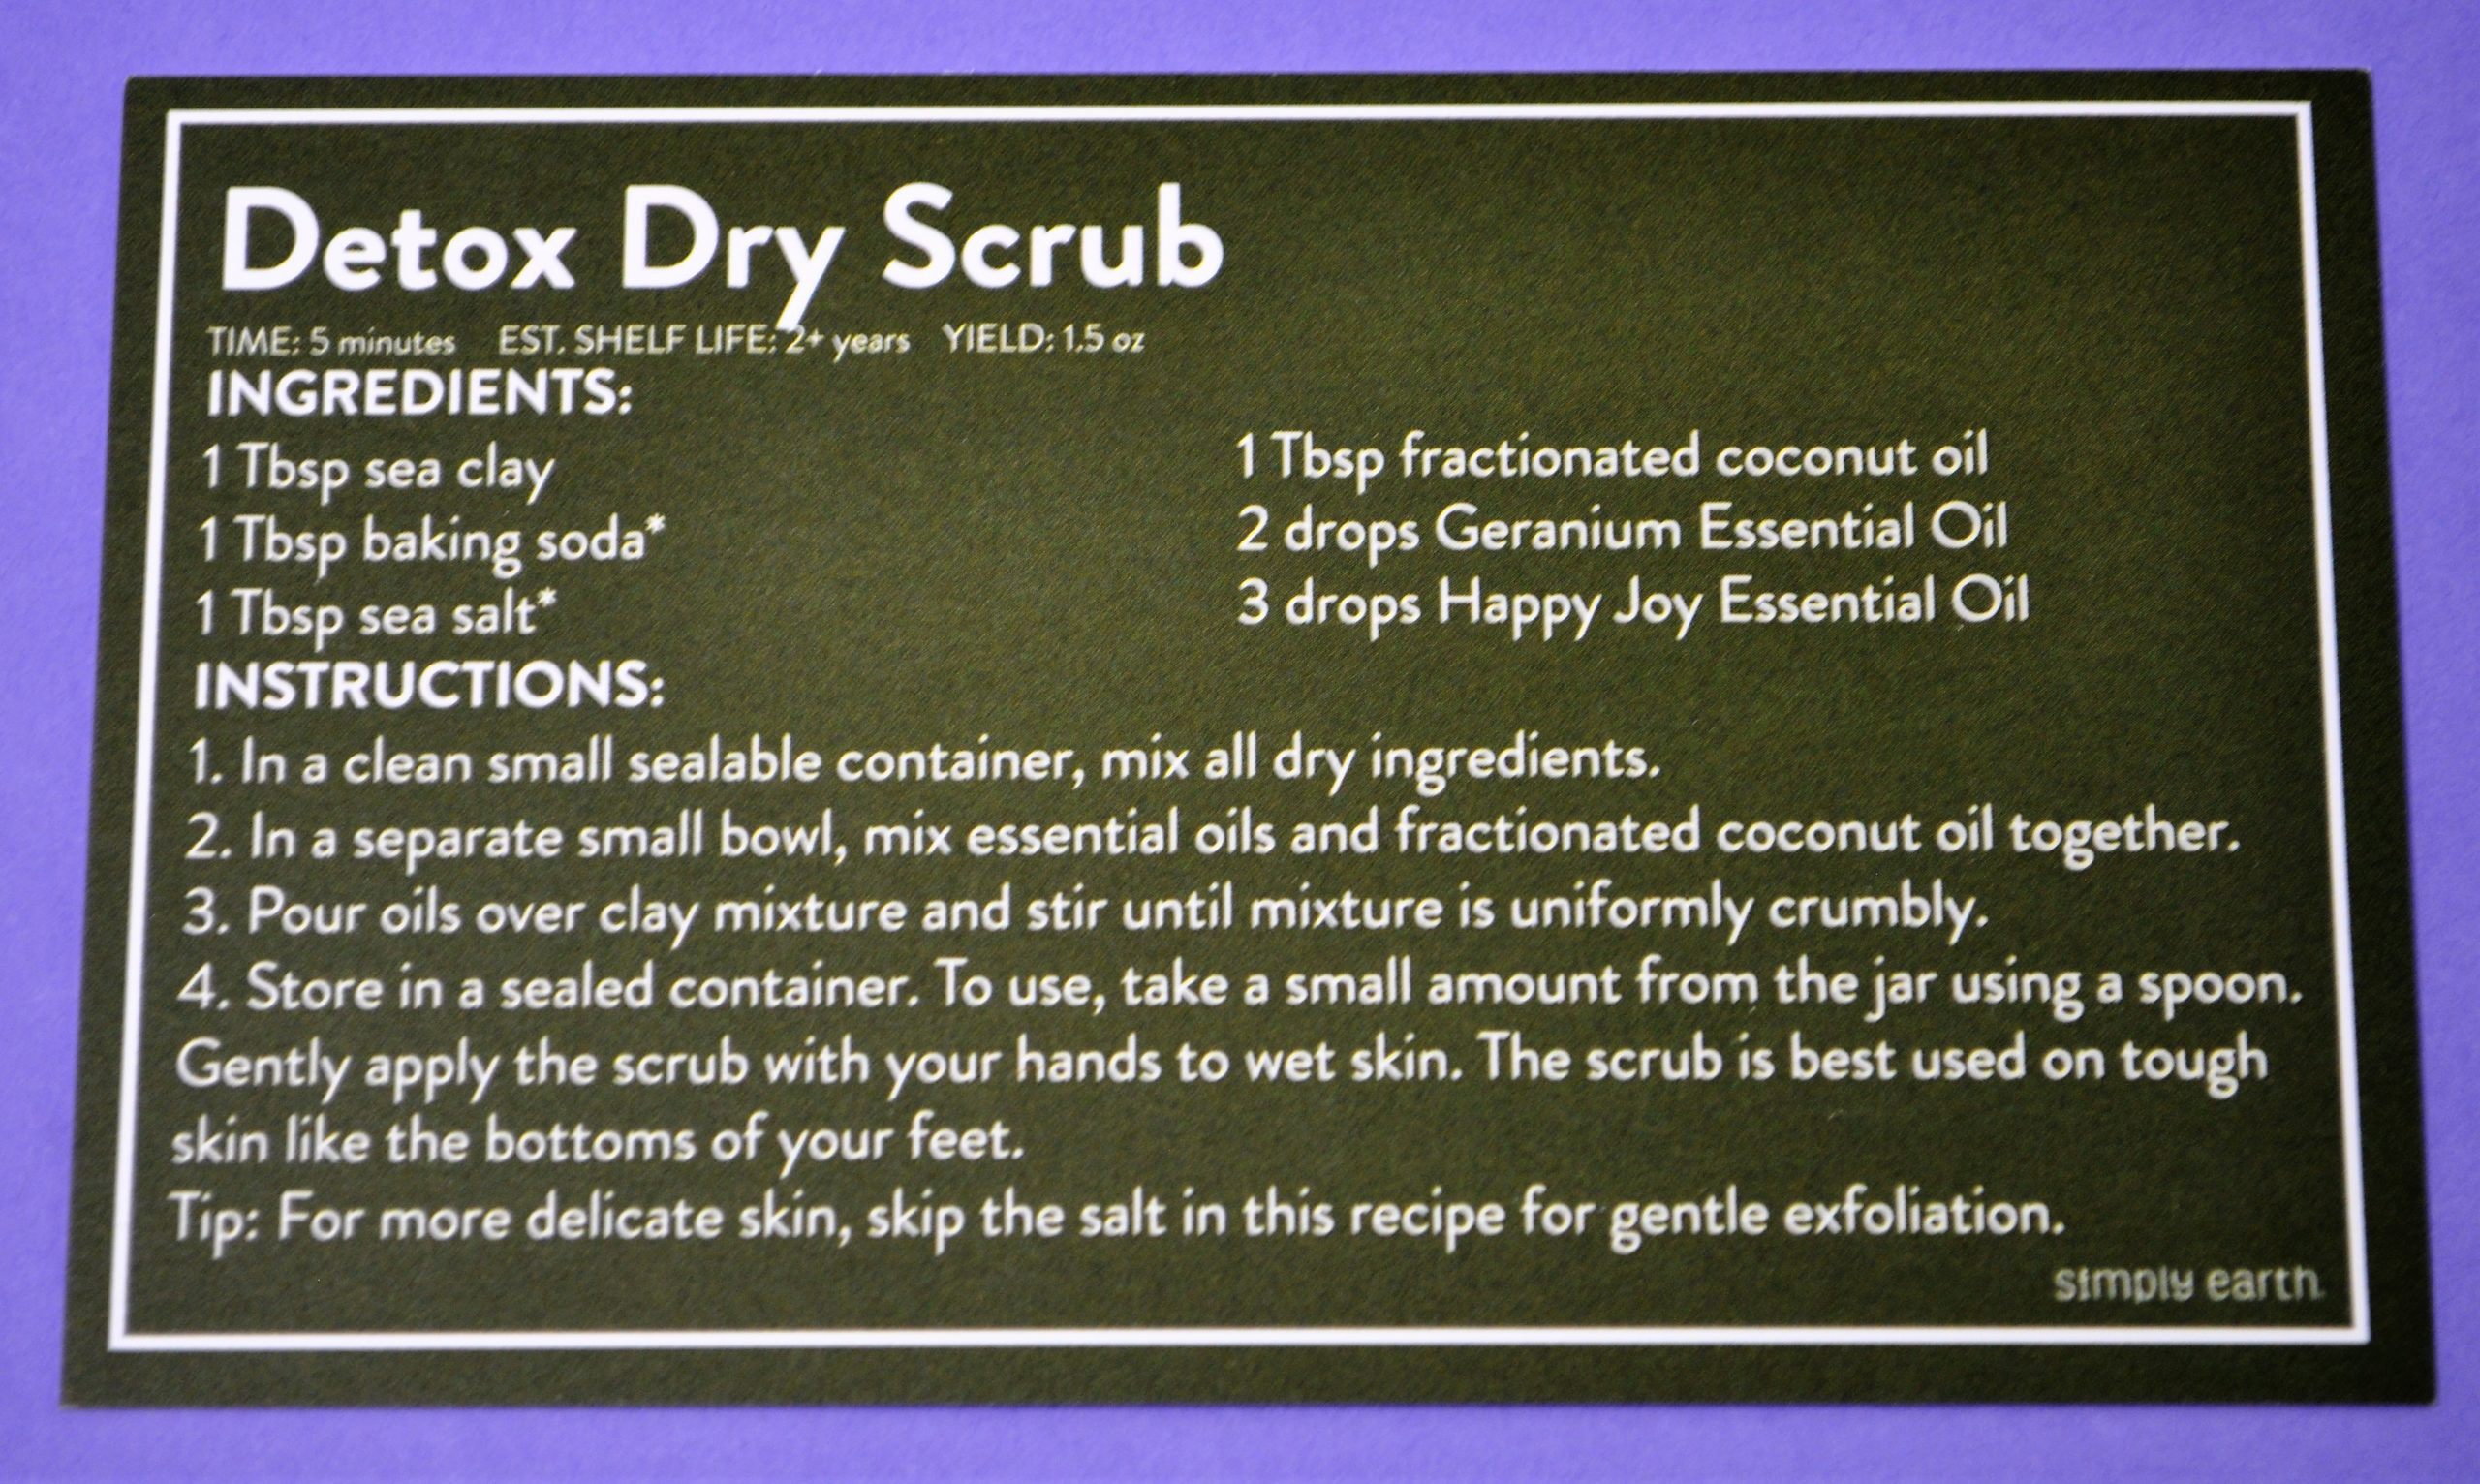 Detox Dry Scrub Recipe Card